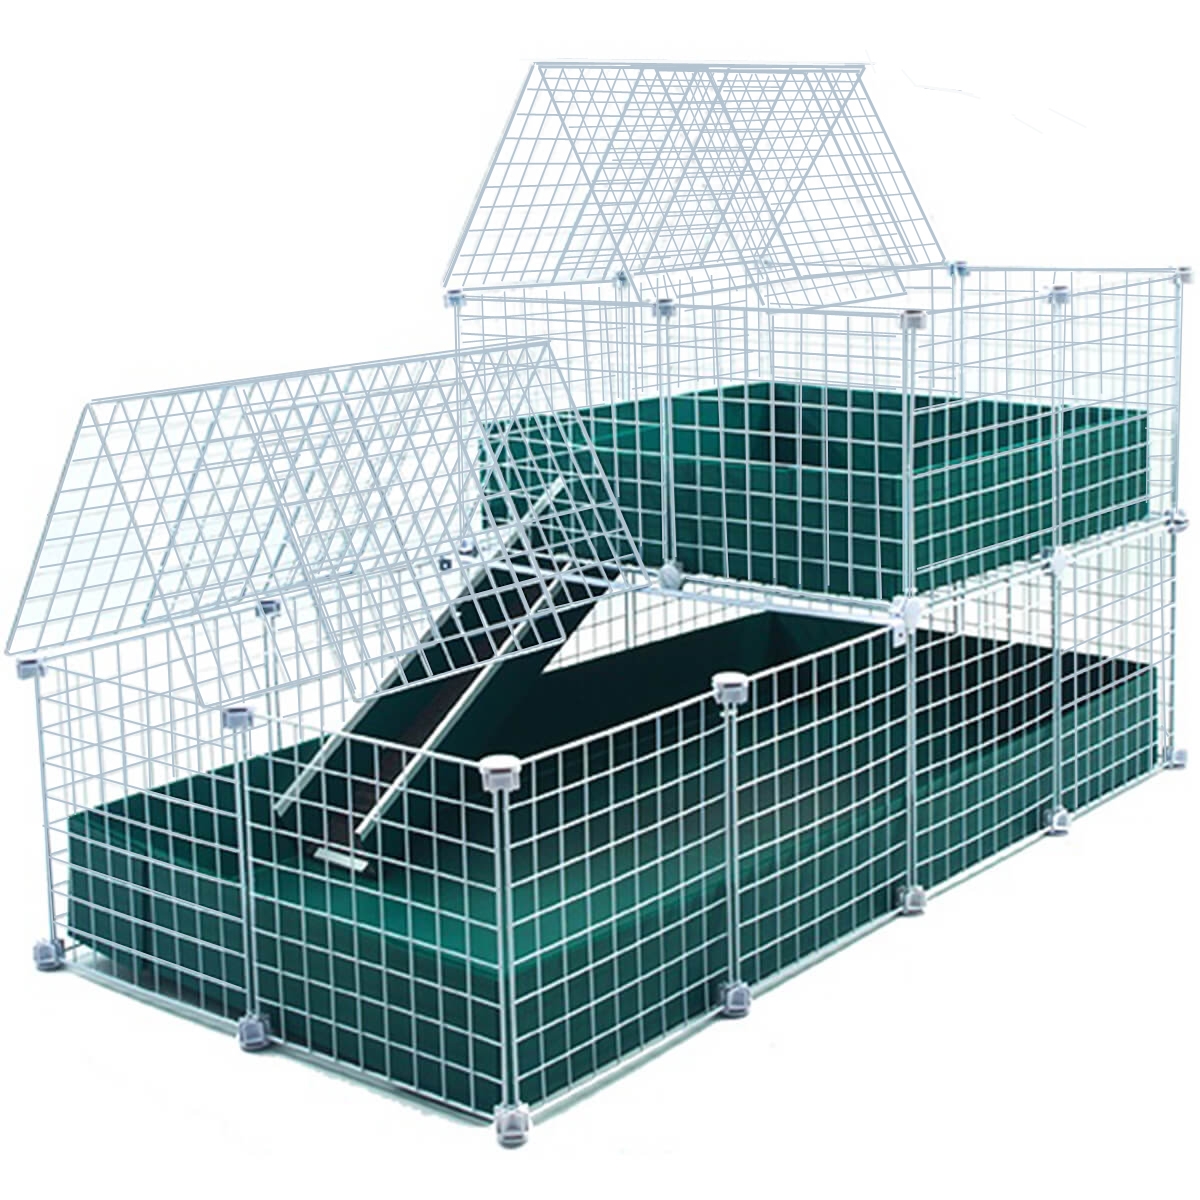 2 floor guinea pig cages